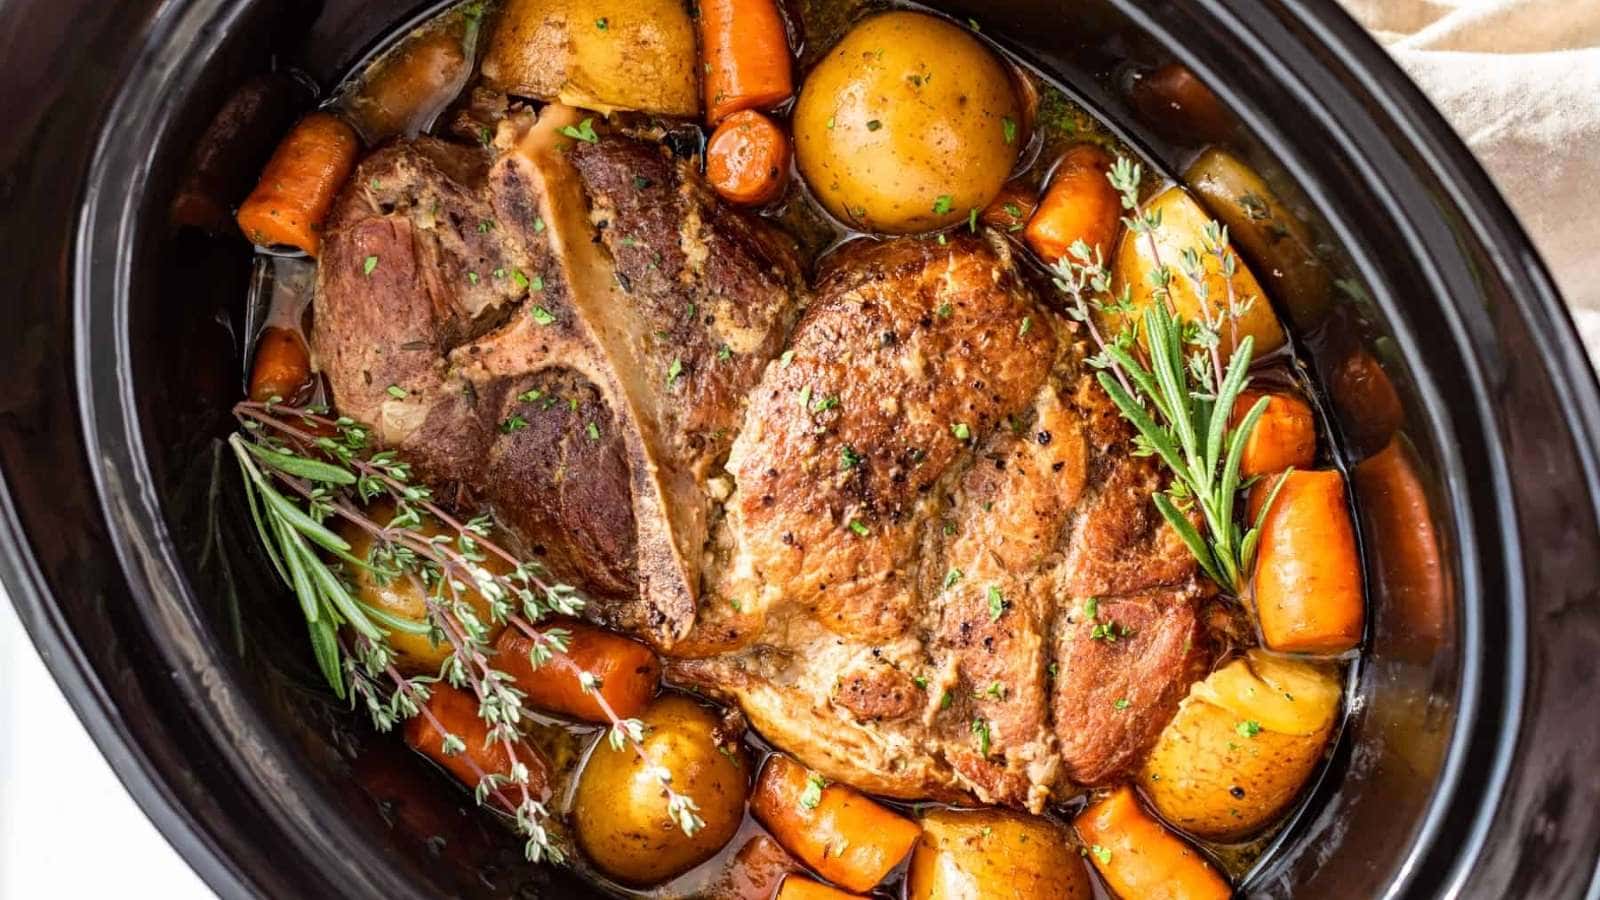 A crock pot full of meat, potatoes and carrots.